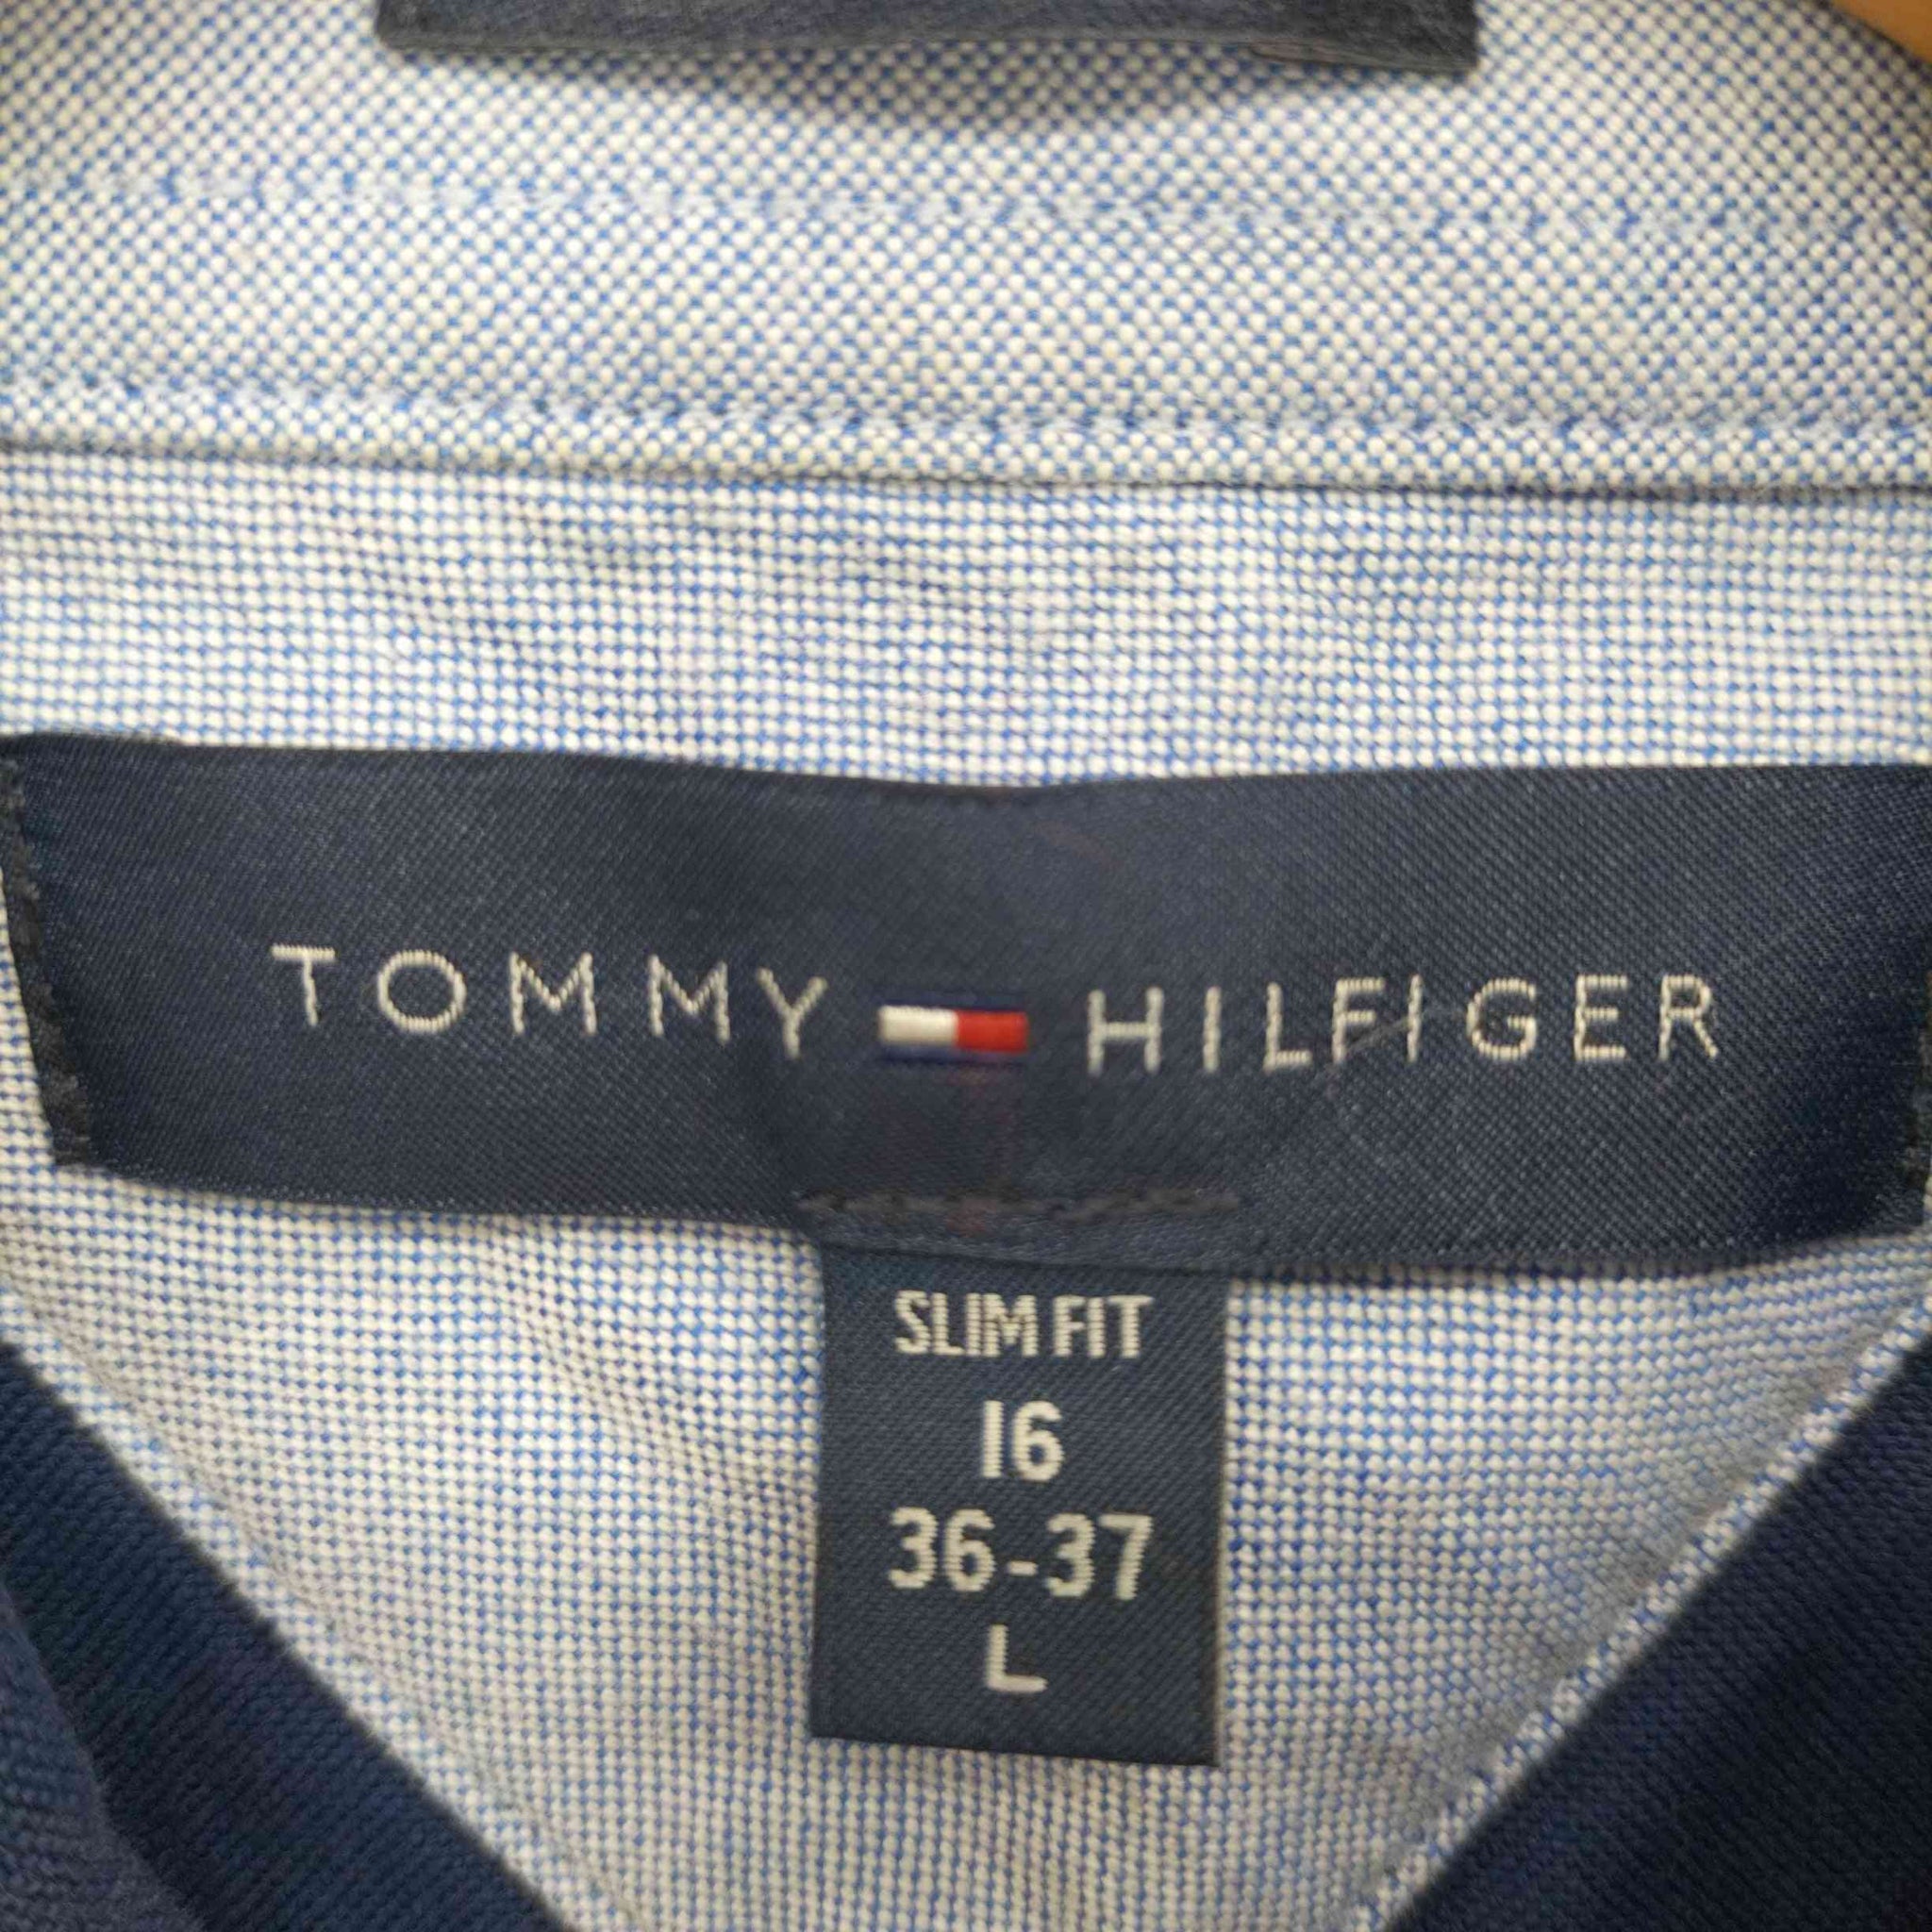 TOMMY HILFIGER(トミーヒルフィガー)Heritage Oxford SLIM FIT オックスフォードシャツ